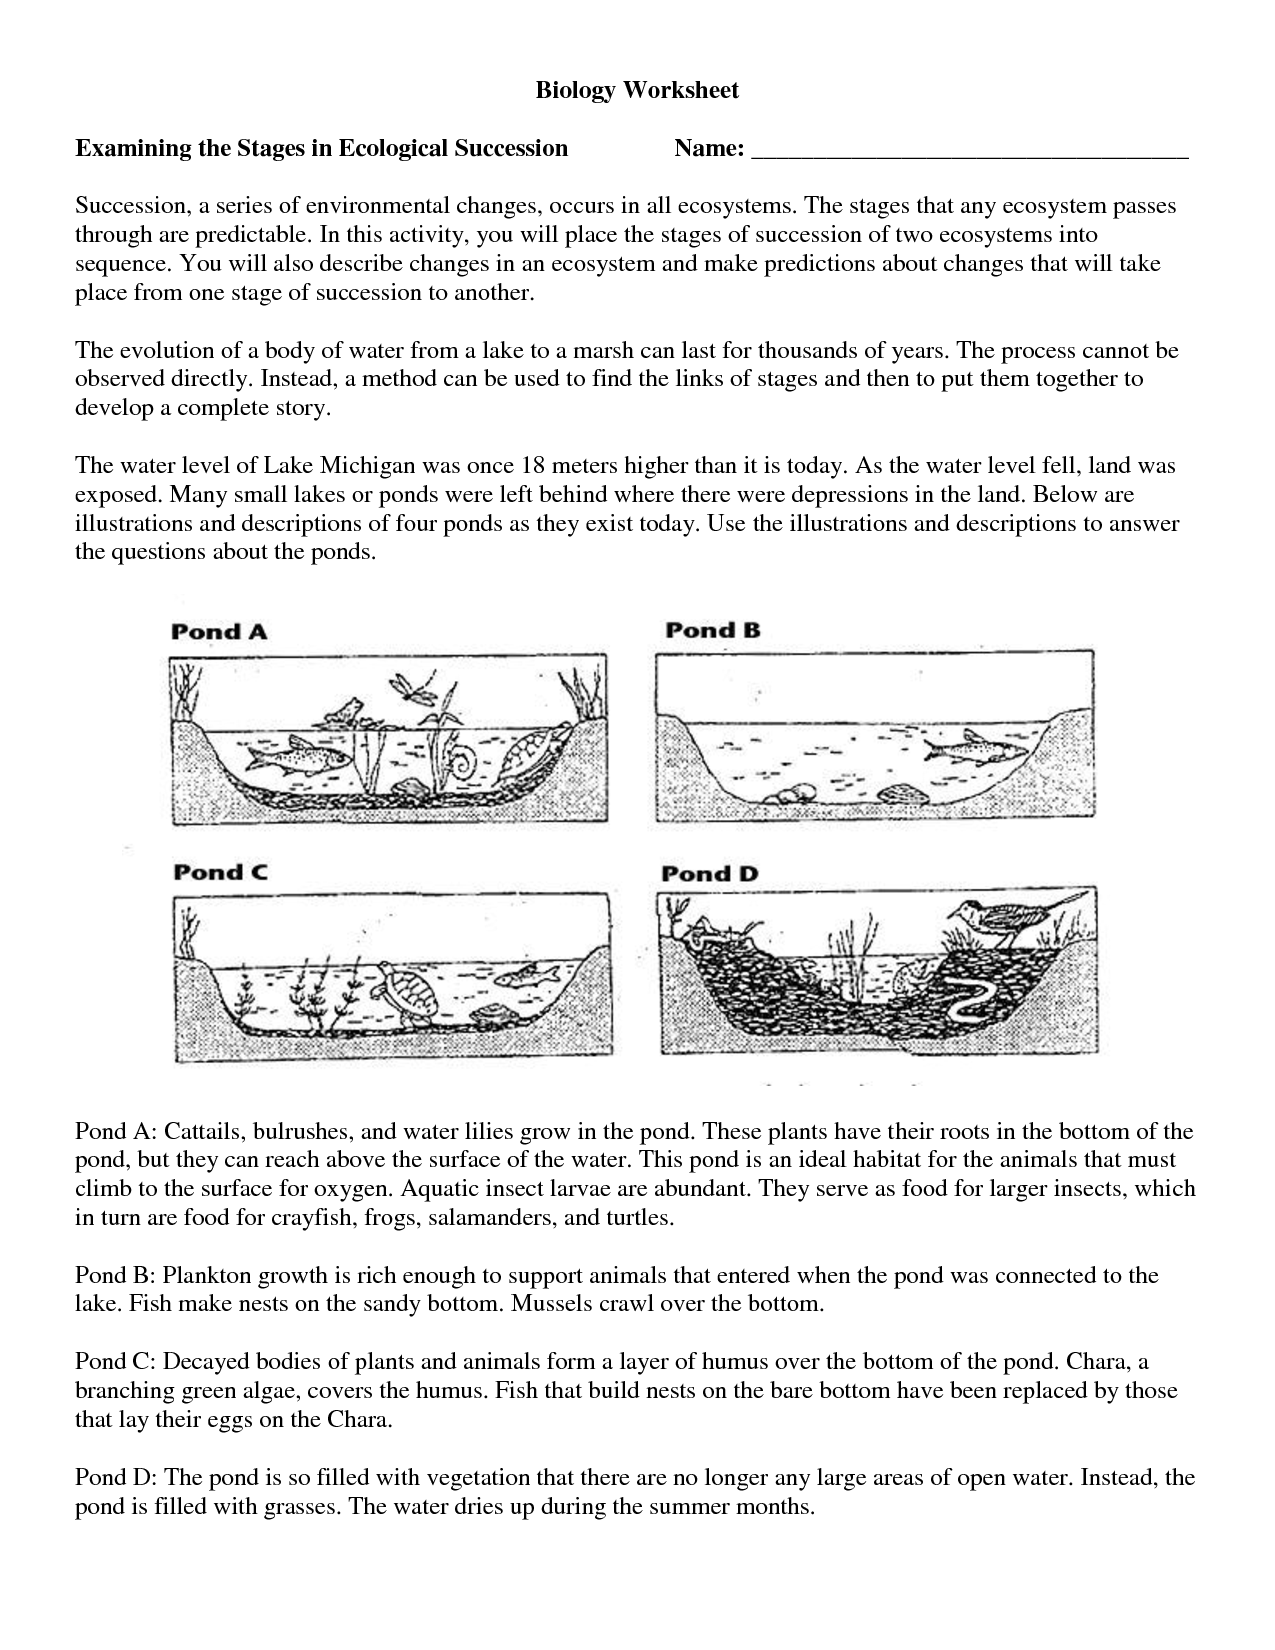 Marine Biology Worksheets High School Image